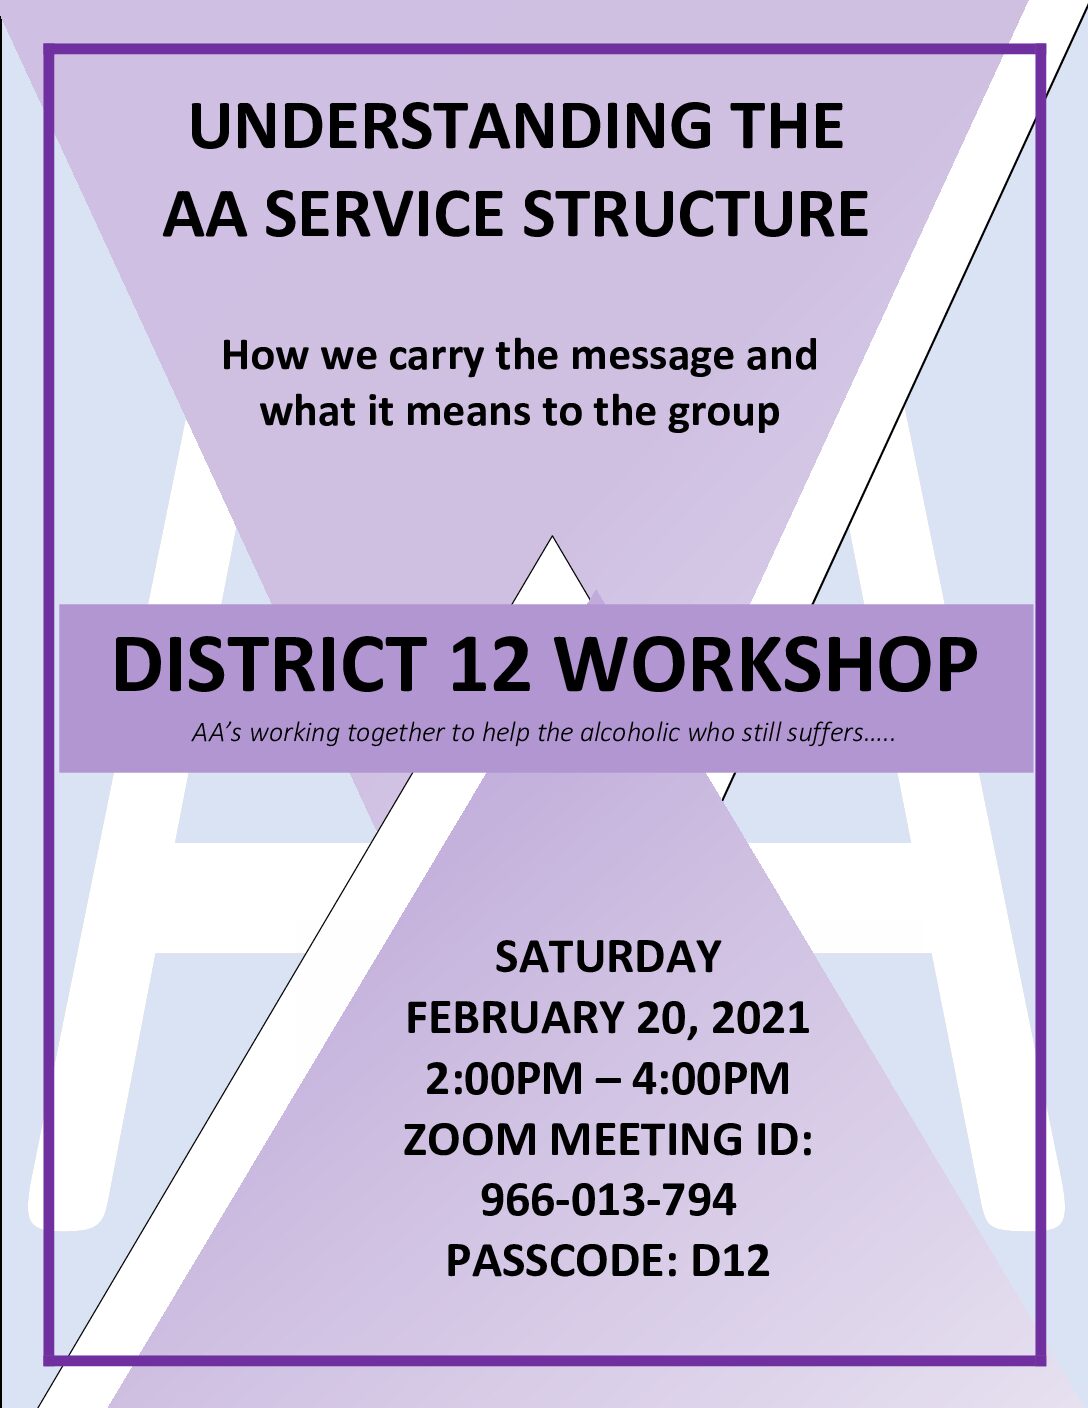 District 12 Workshop